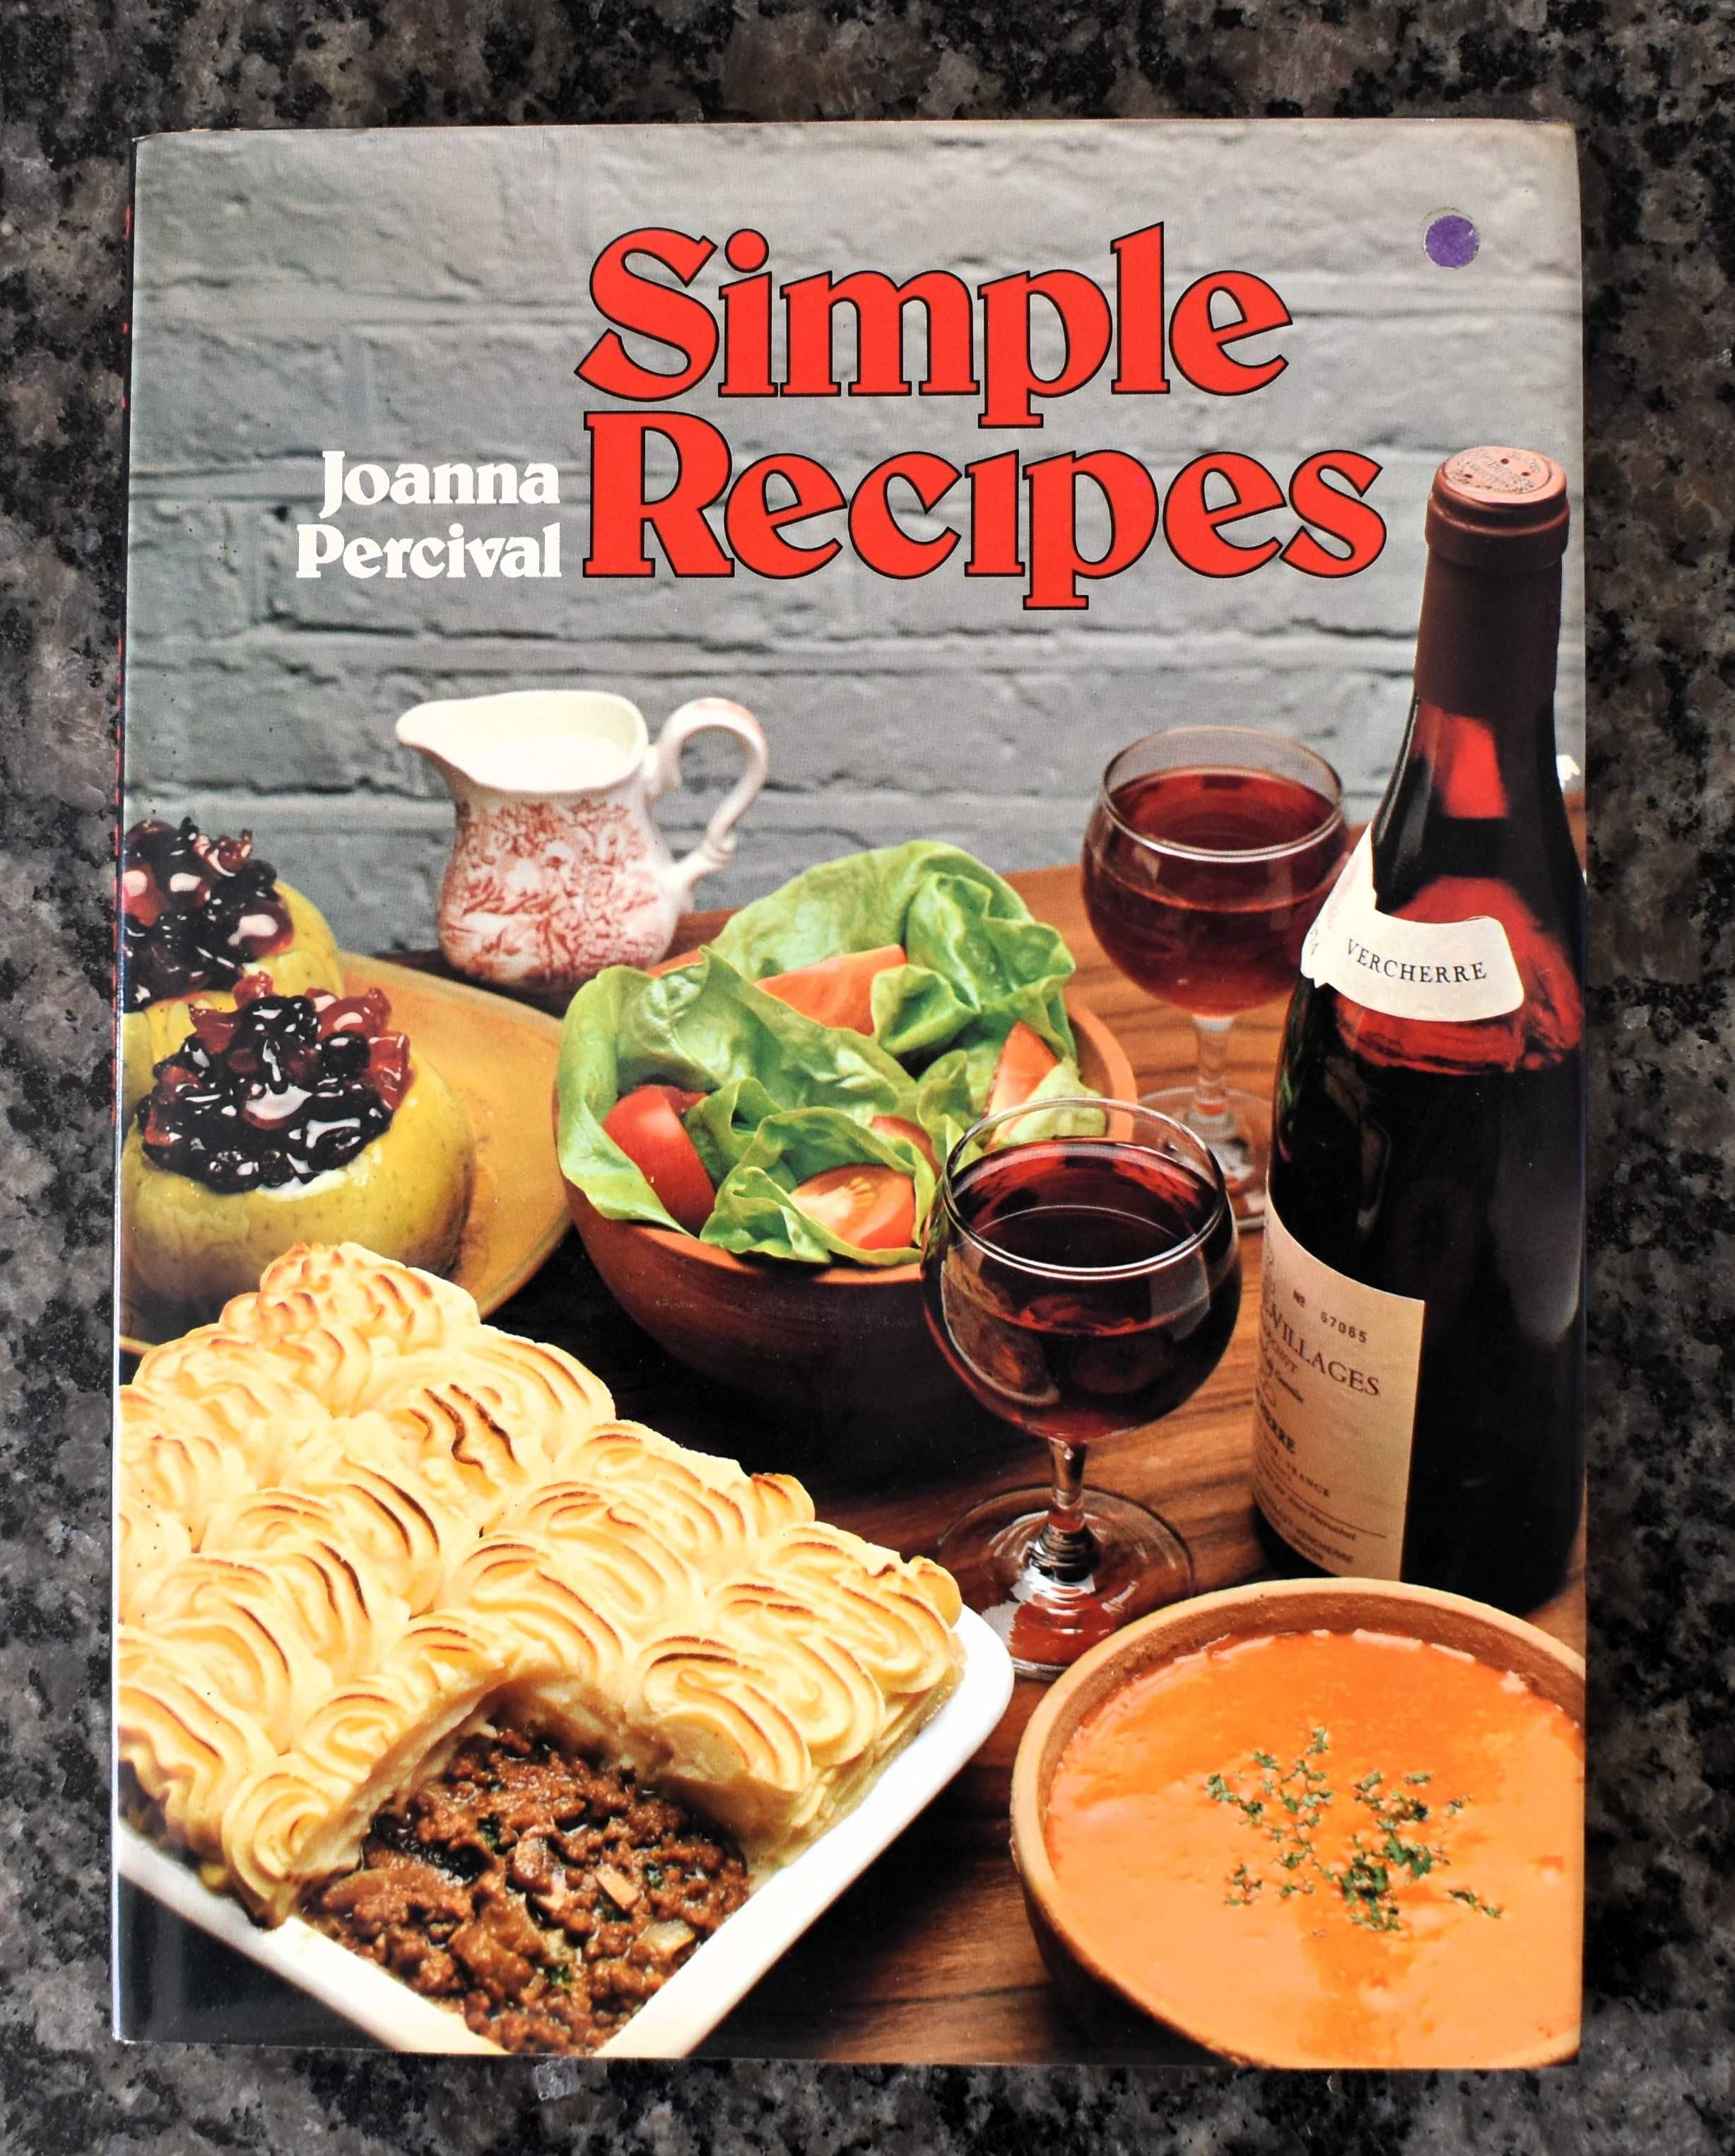 2 Livros: Classic Recipes & Simple Reciples